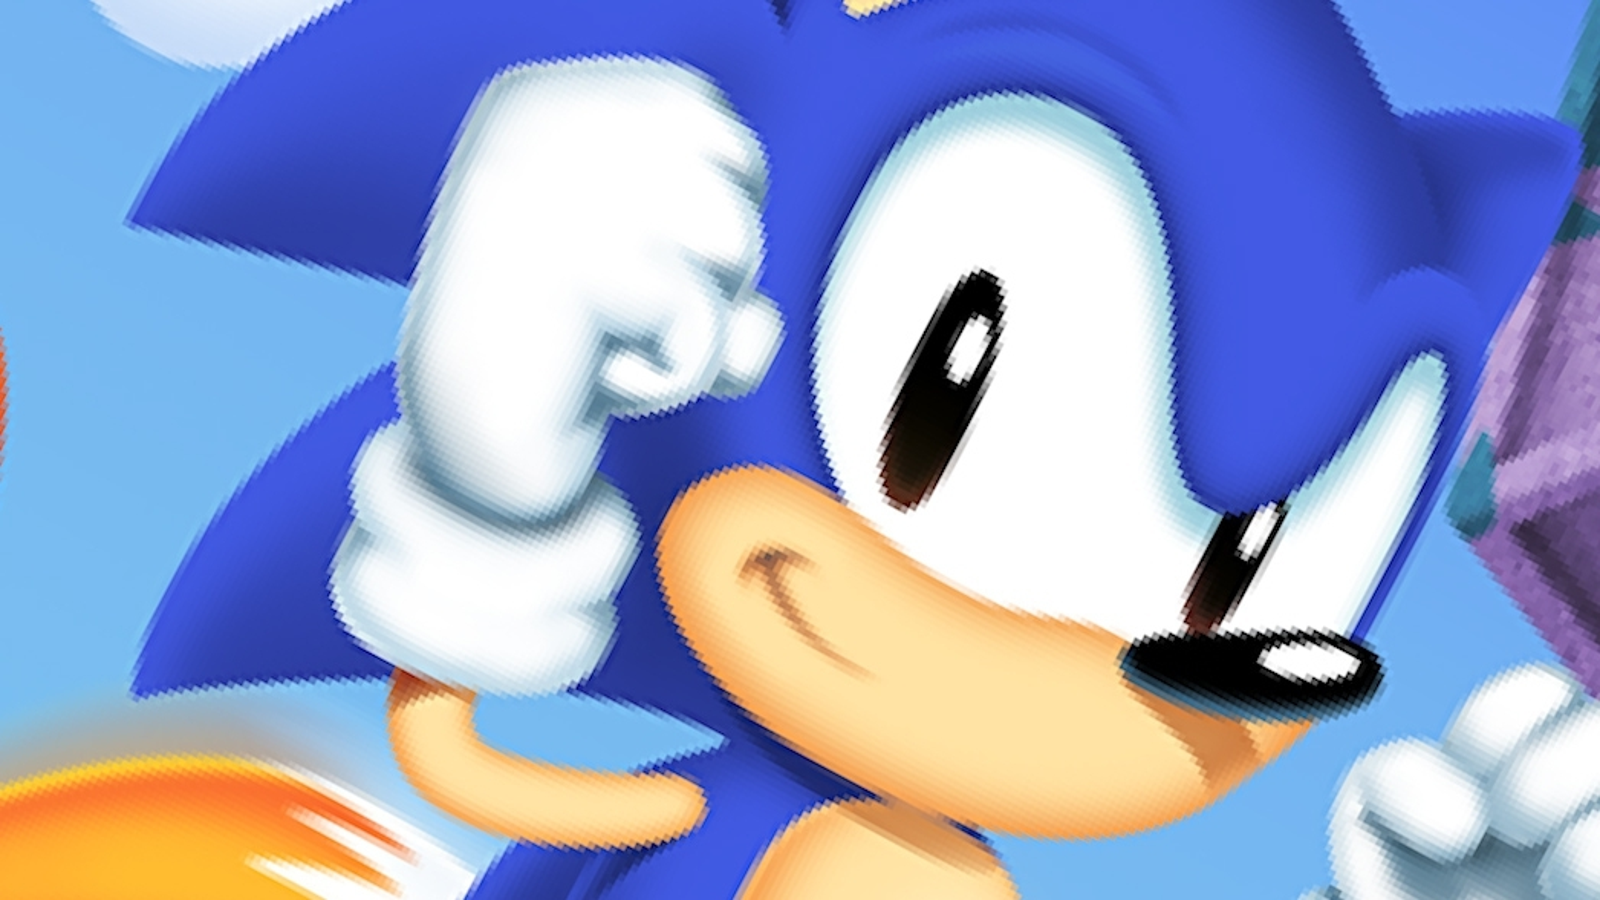 Sonic 2 Master System Remake (2018)